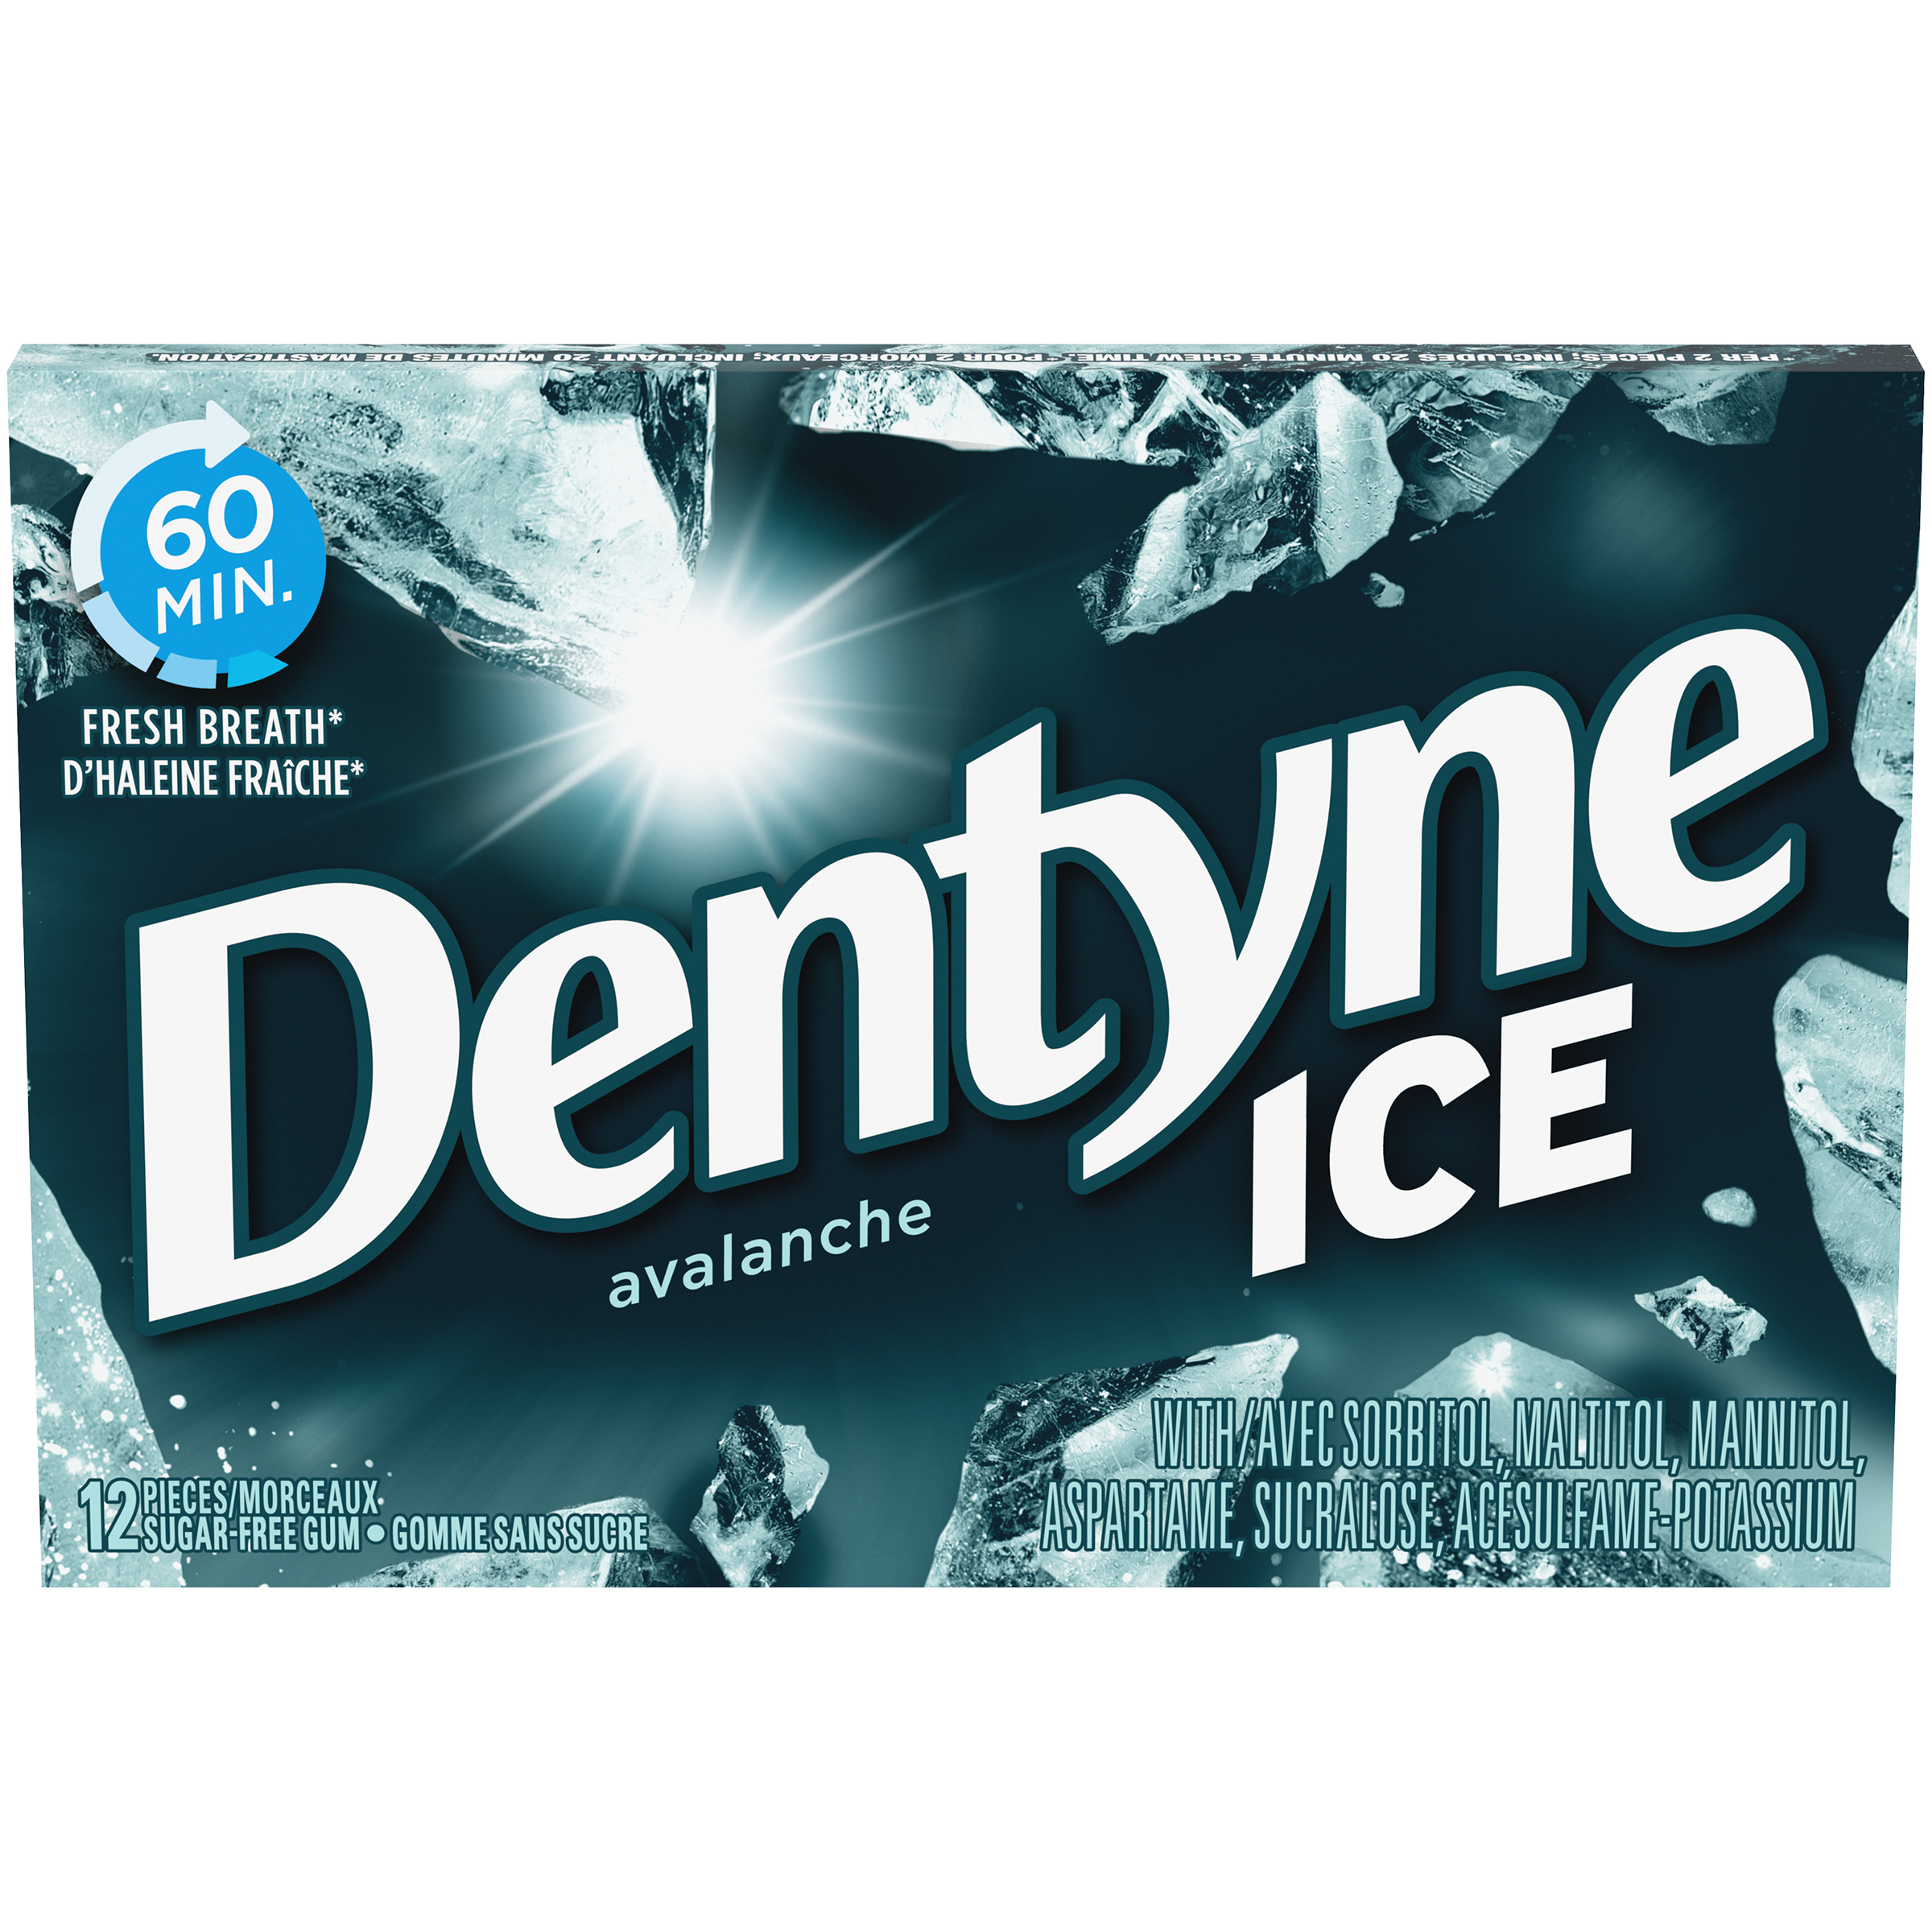 DENTYNE ICE AVALANCHE 12MCX